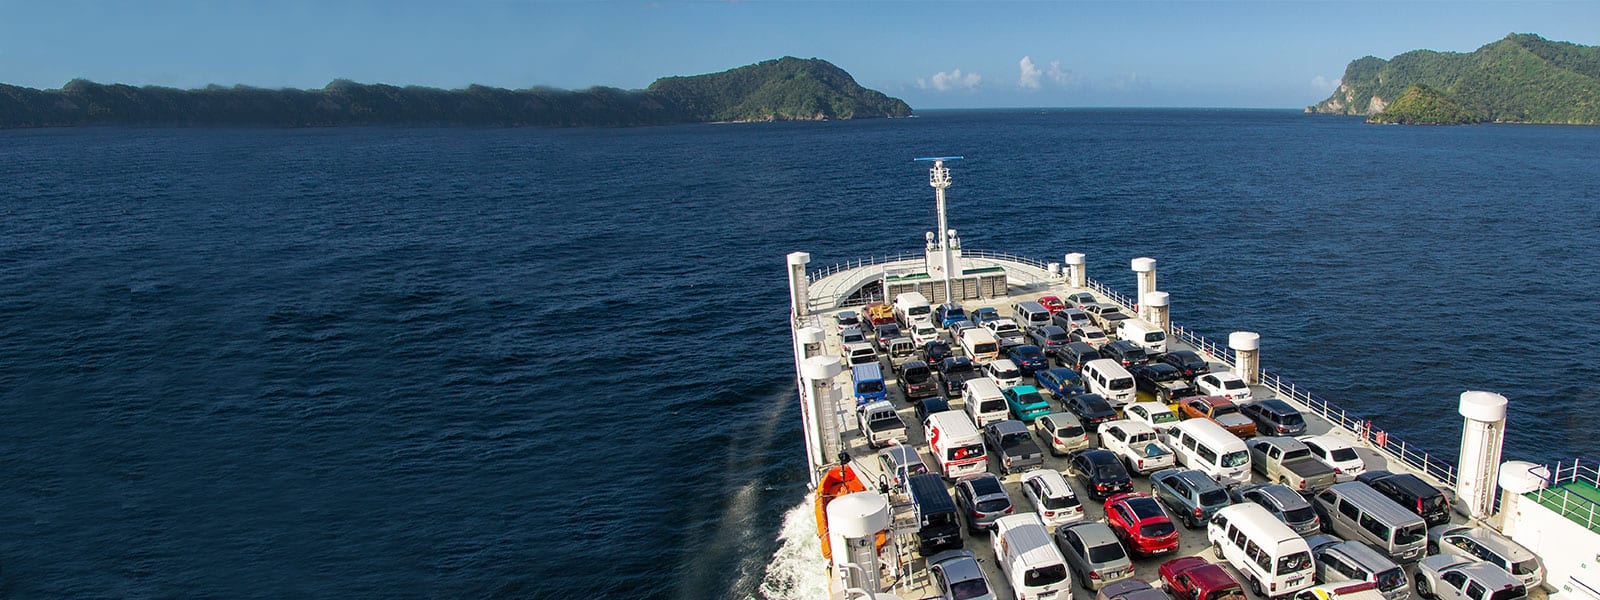 MV Cabo Star continues ferry service between Trinidad and Tobago